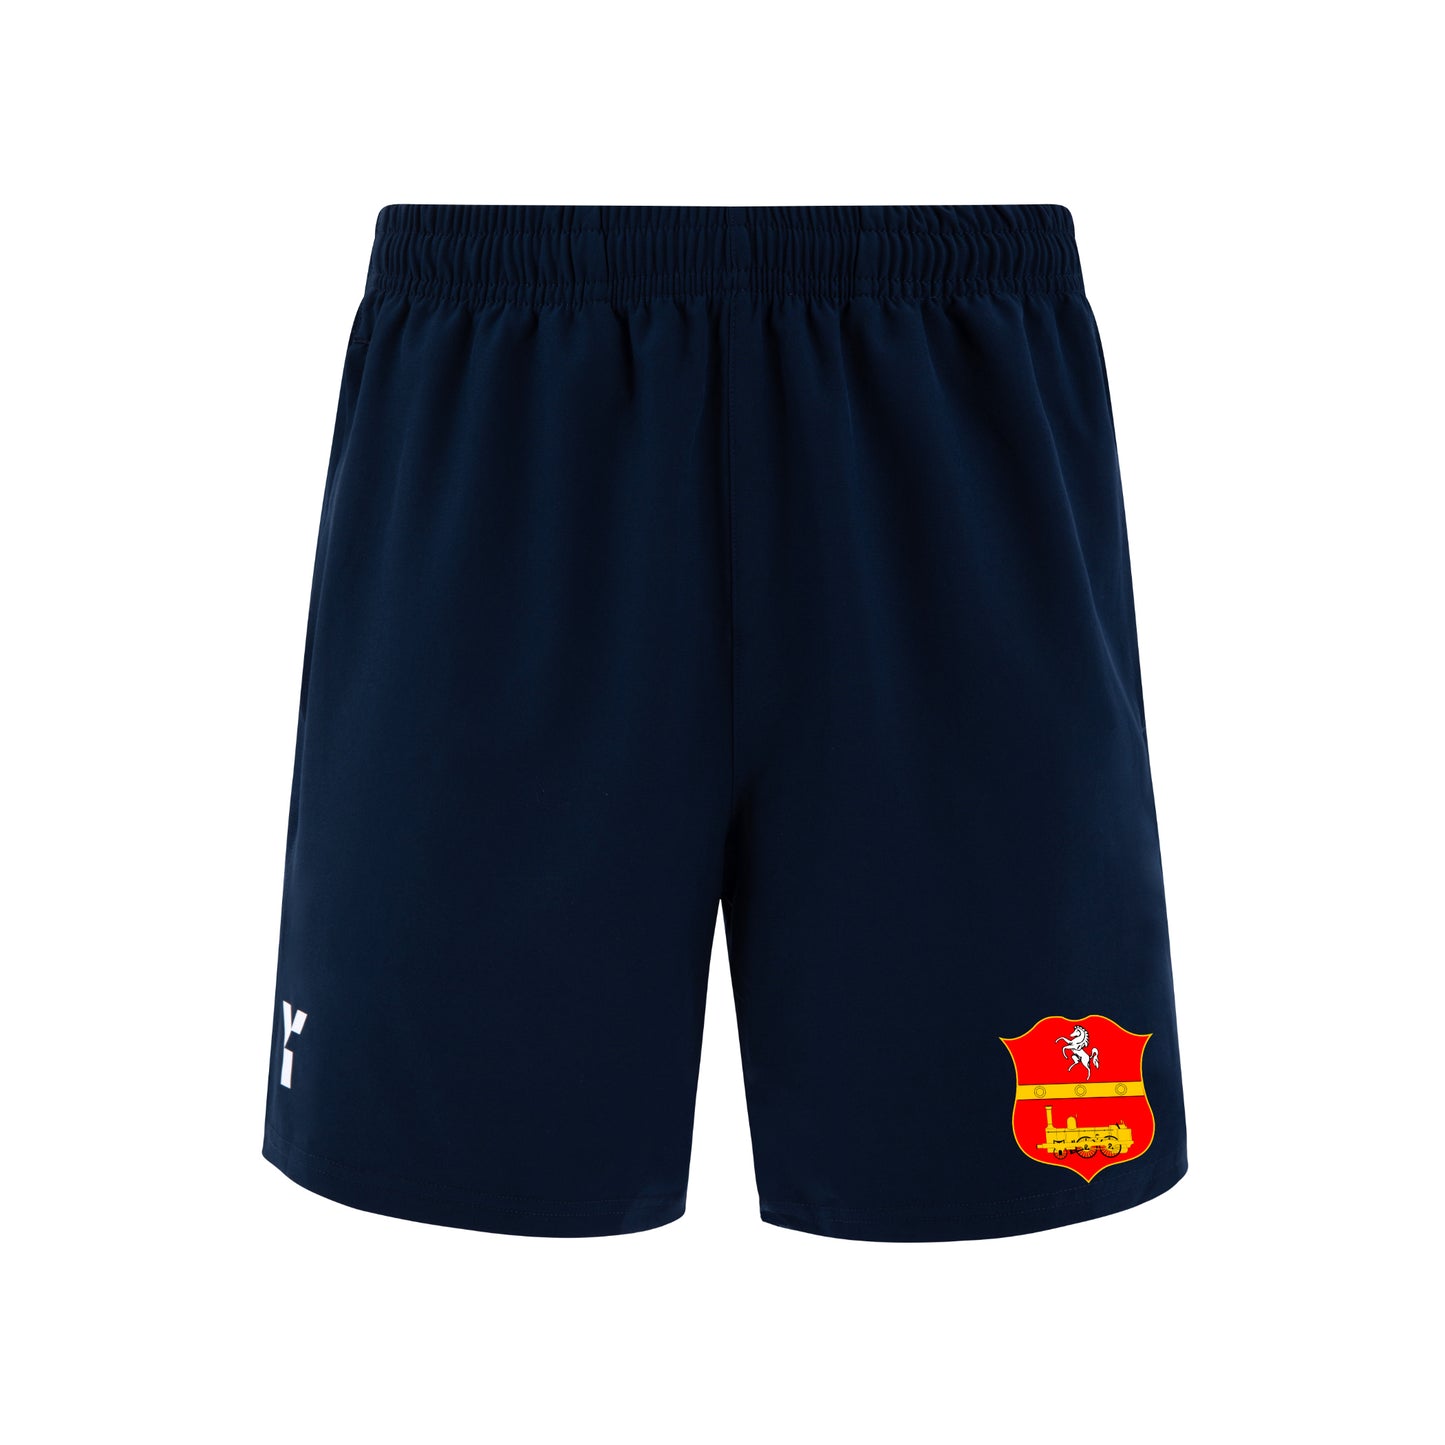 Ashford HC - Shorts Men's Navy